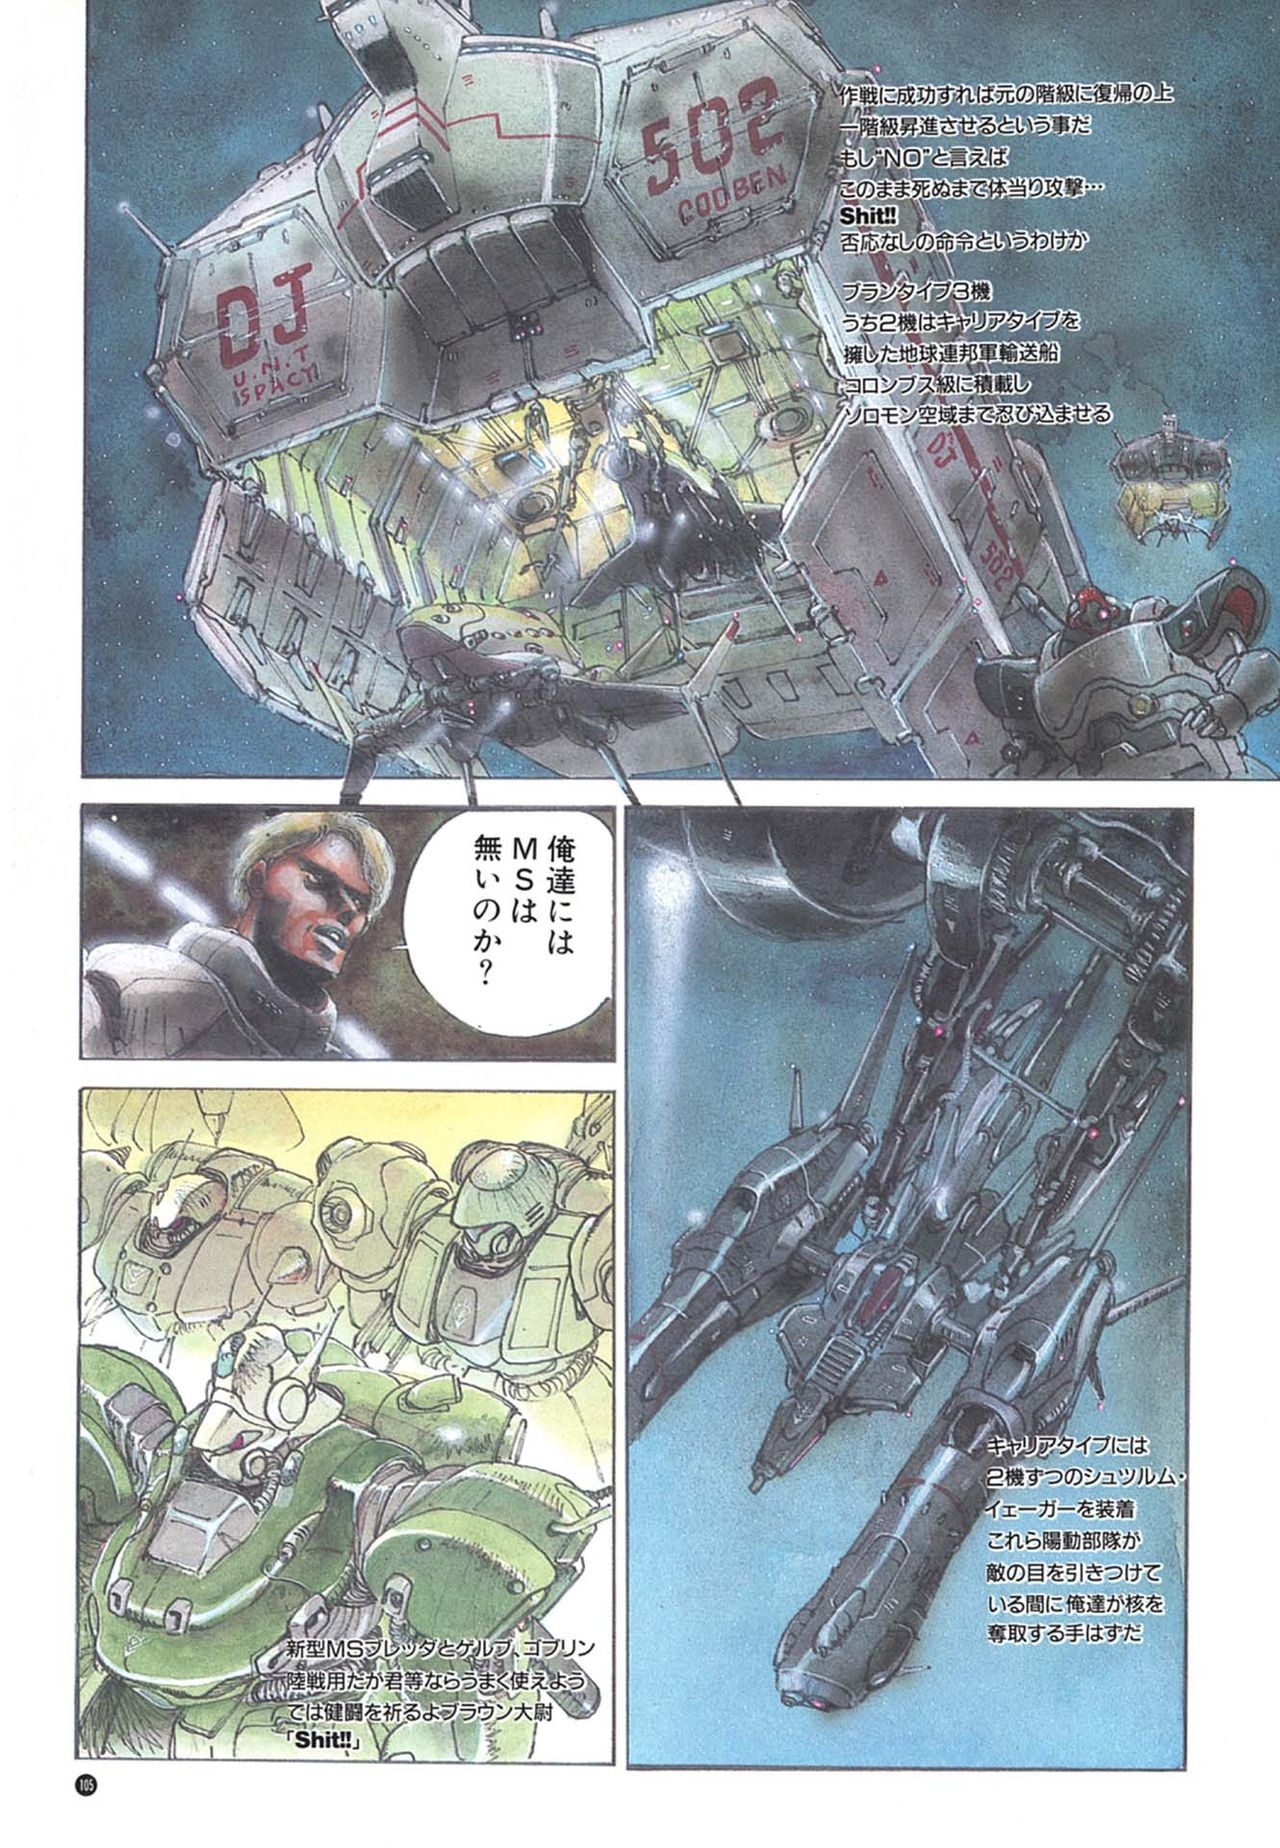 [Kazuhisa Kondo] Kazuhisa Kondo 2D & 3D Works - Go Ahead - From Mobile Suit Gundam to Original Mechanism 104